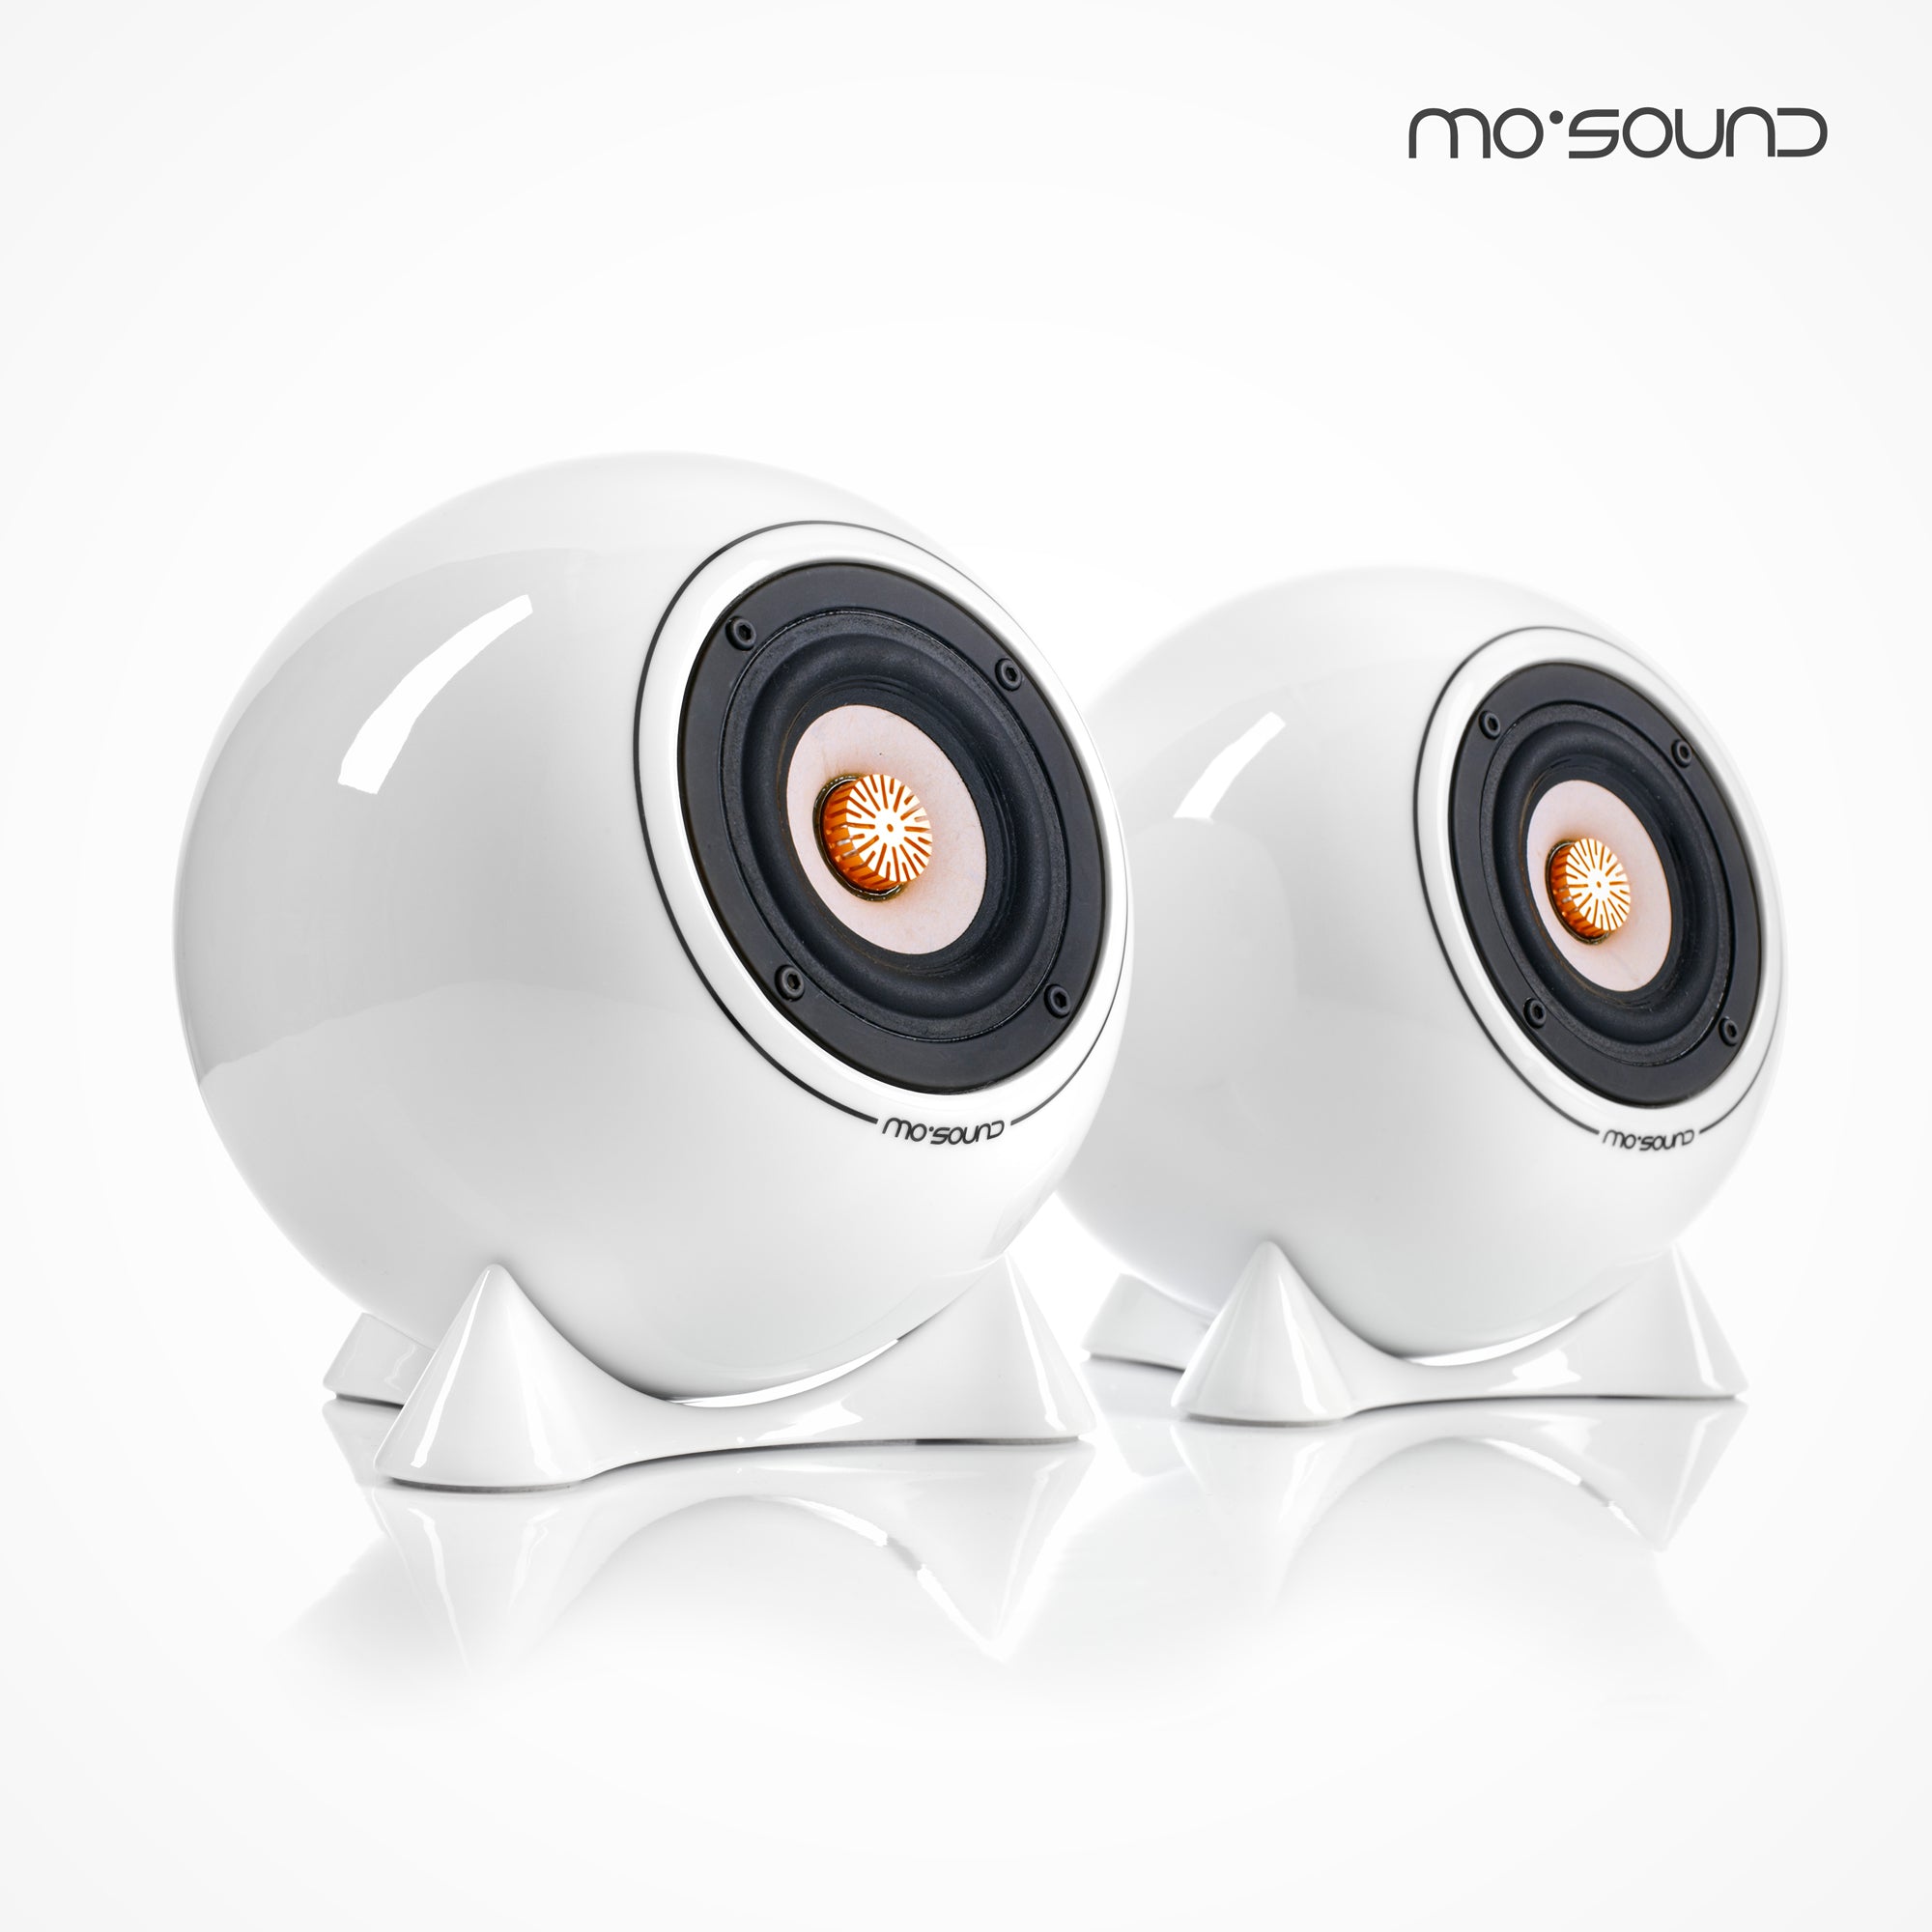 mo° sound - ball speaker superior